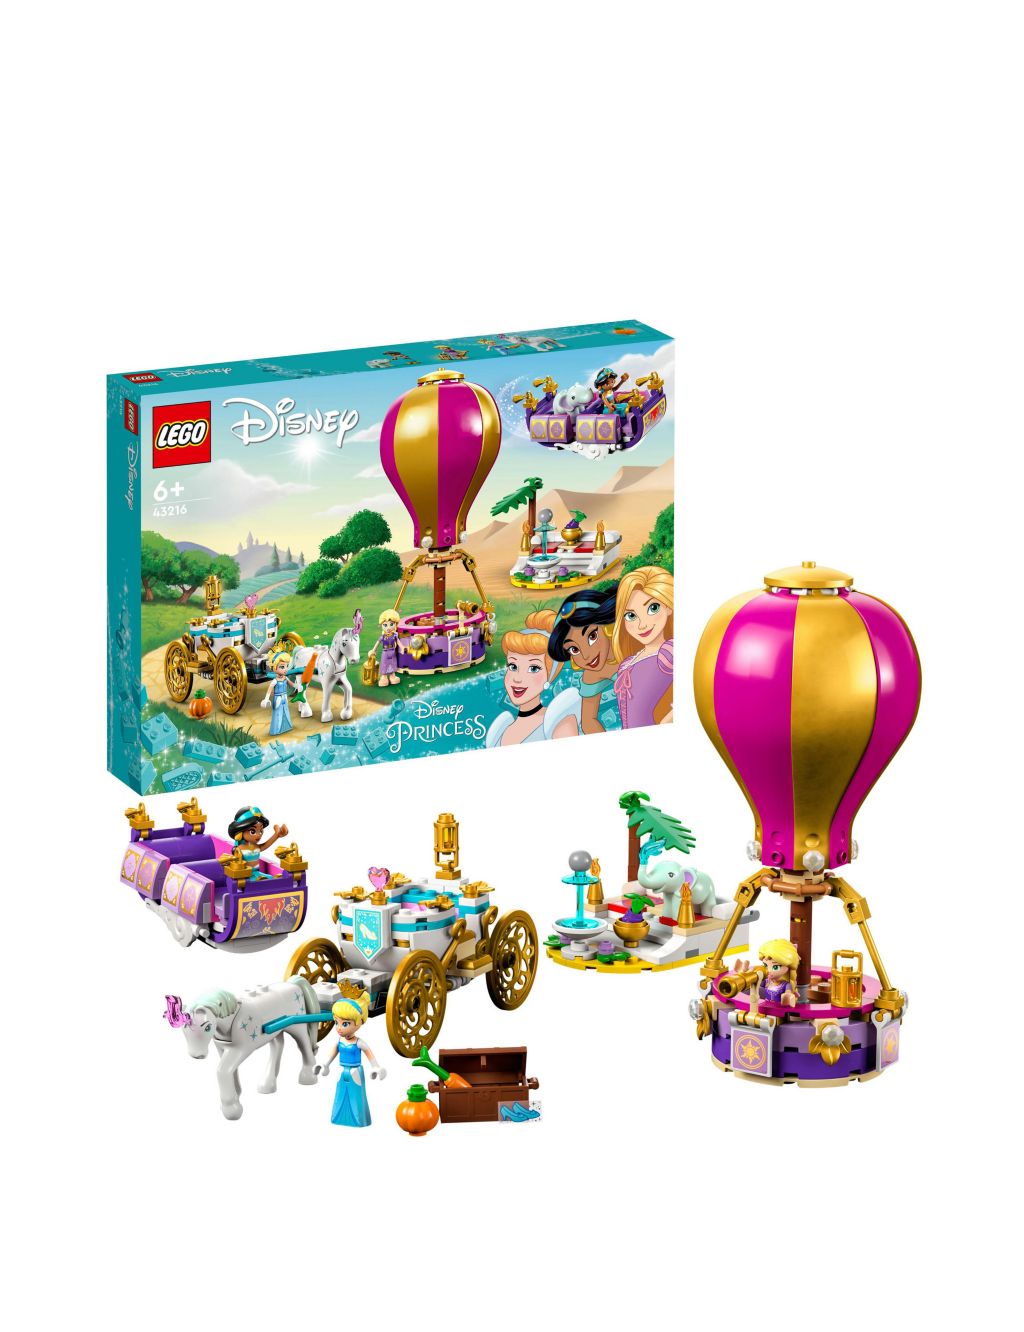 LEGO Disney Princess Enchanted Journey Playset 43216 (6+ Yrs)